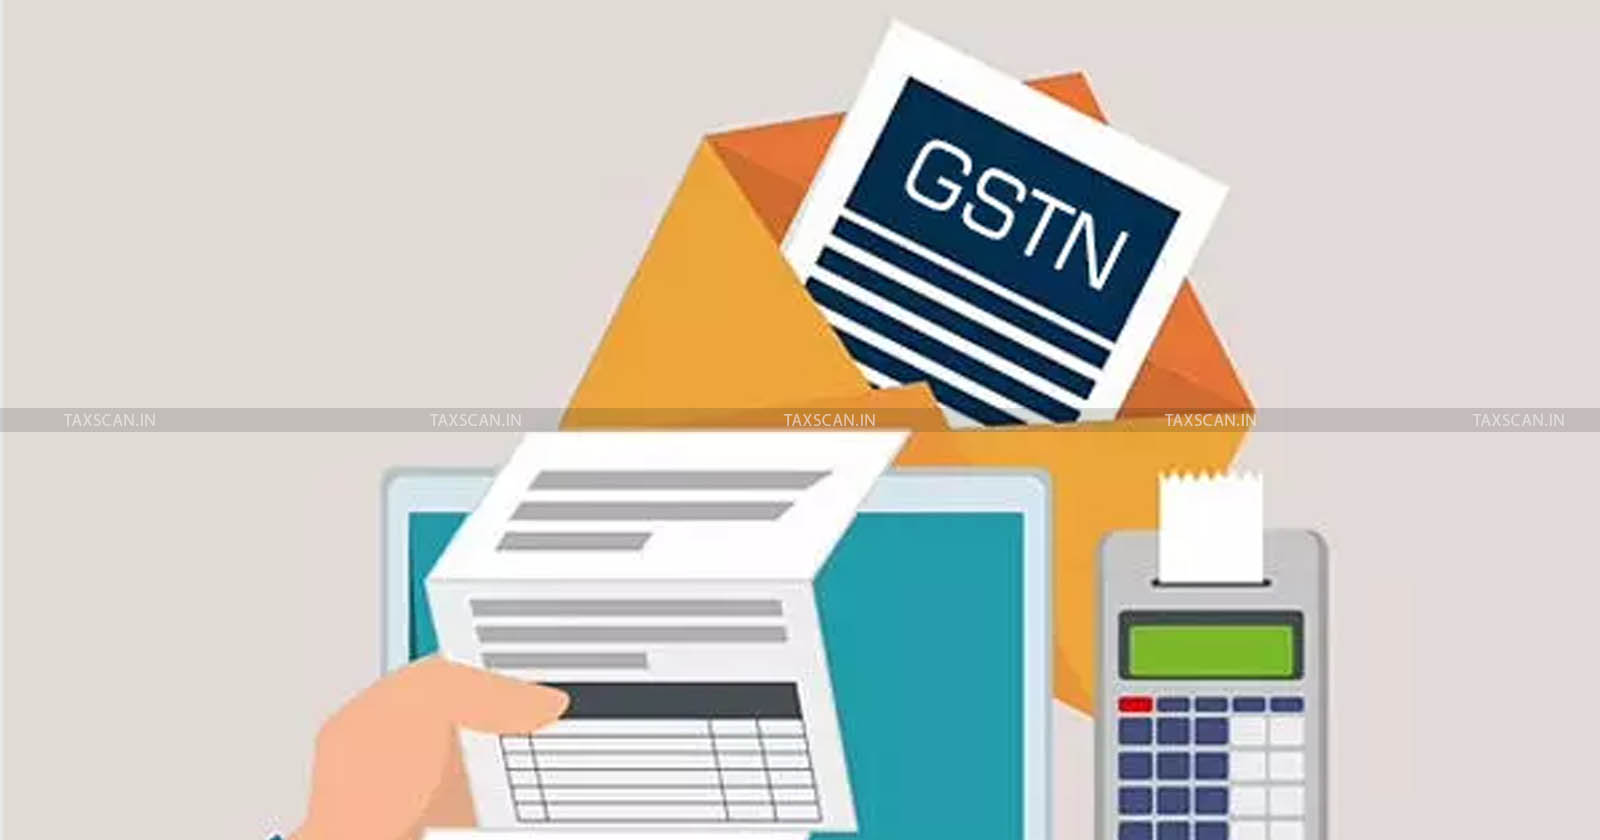 GSTN invites bids - Companies Providing Cloud Technology Services - TAXSCAN